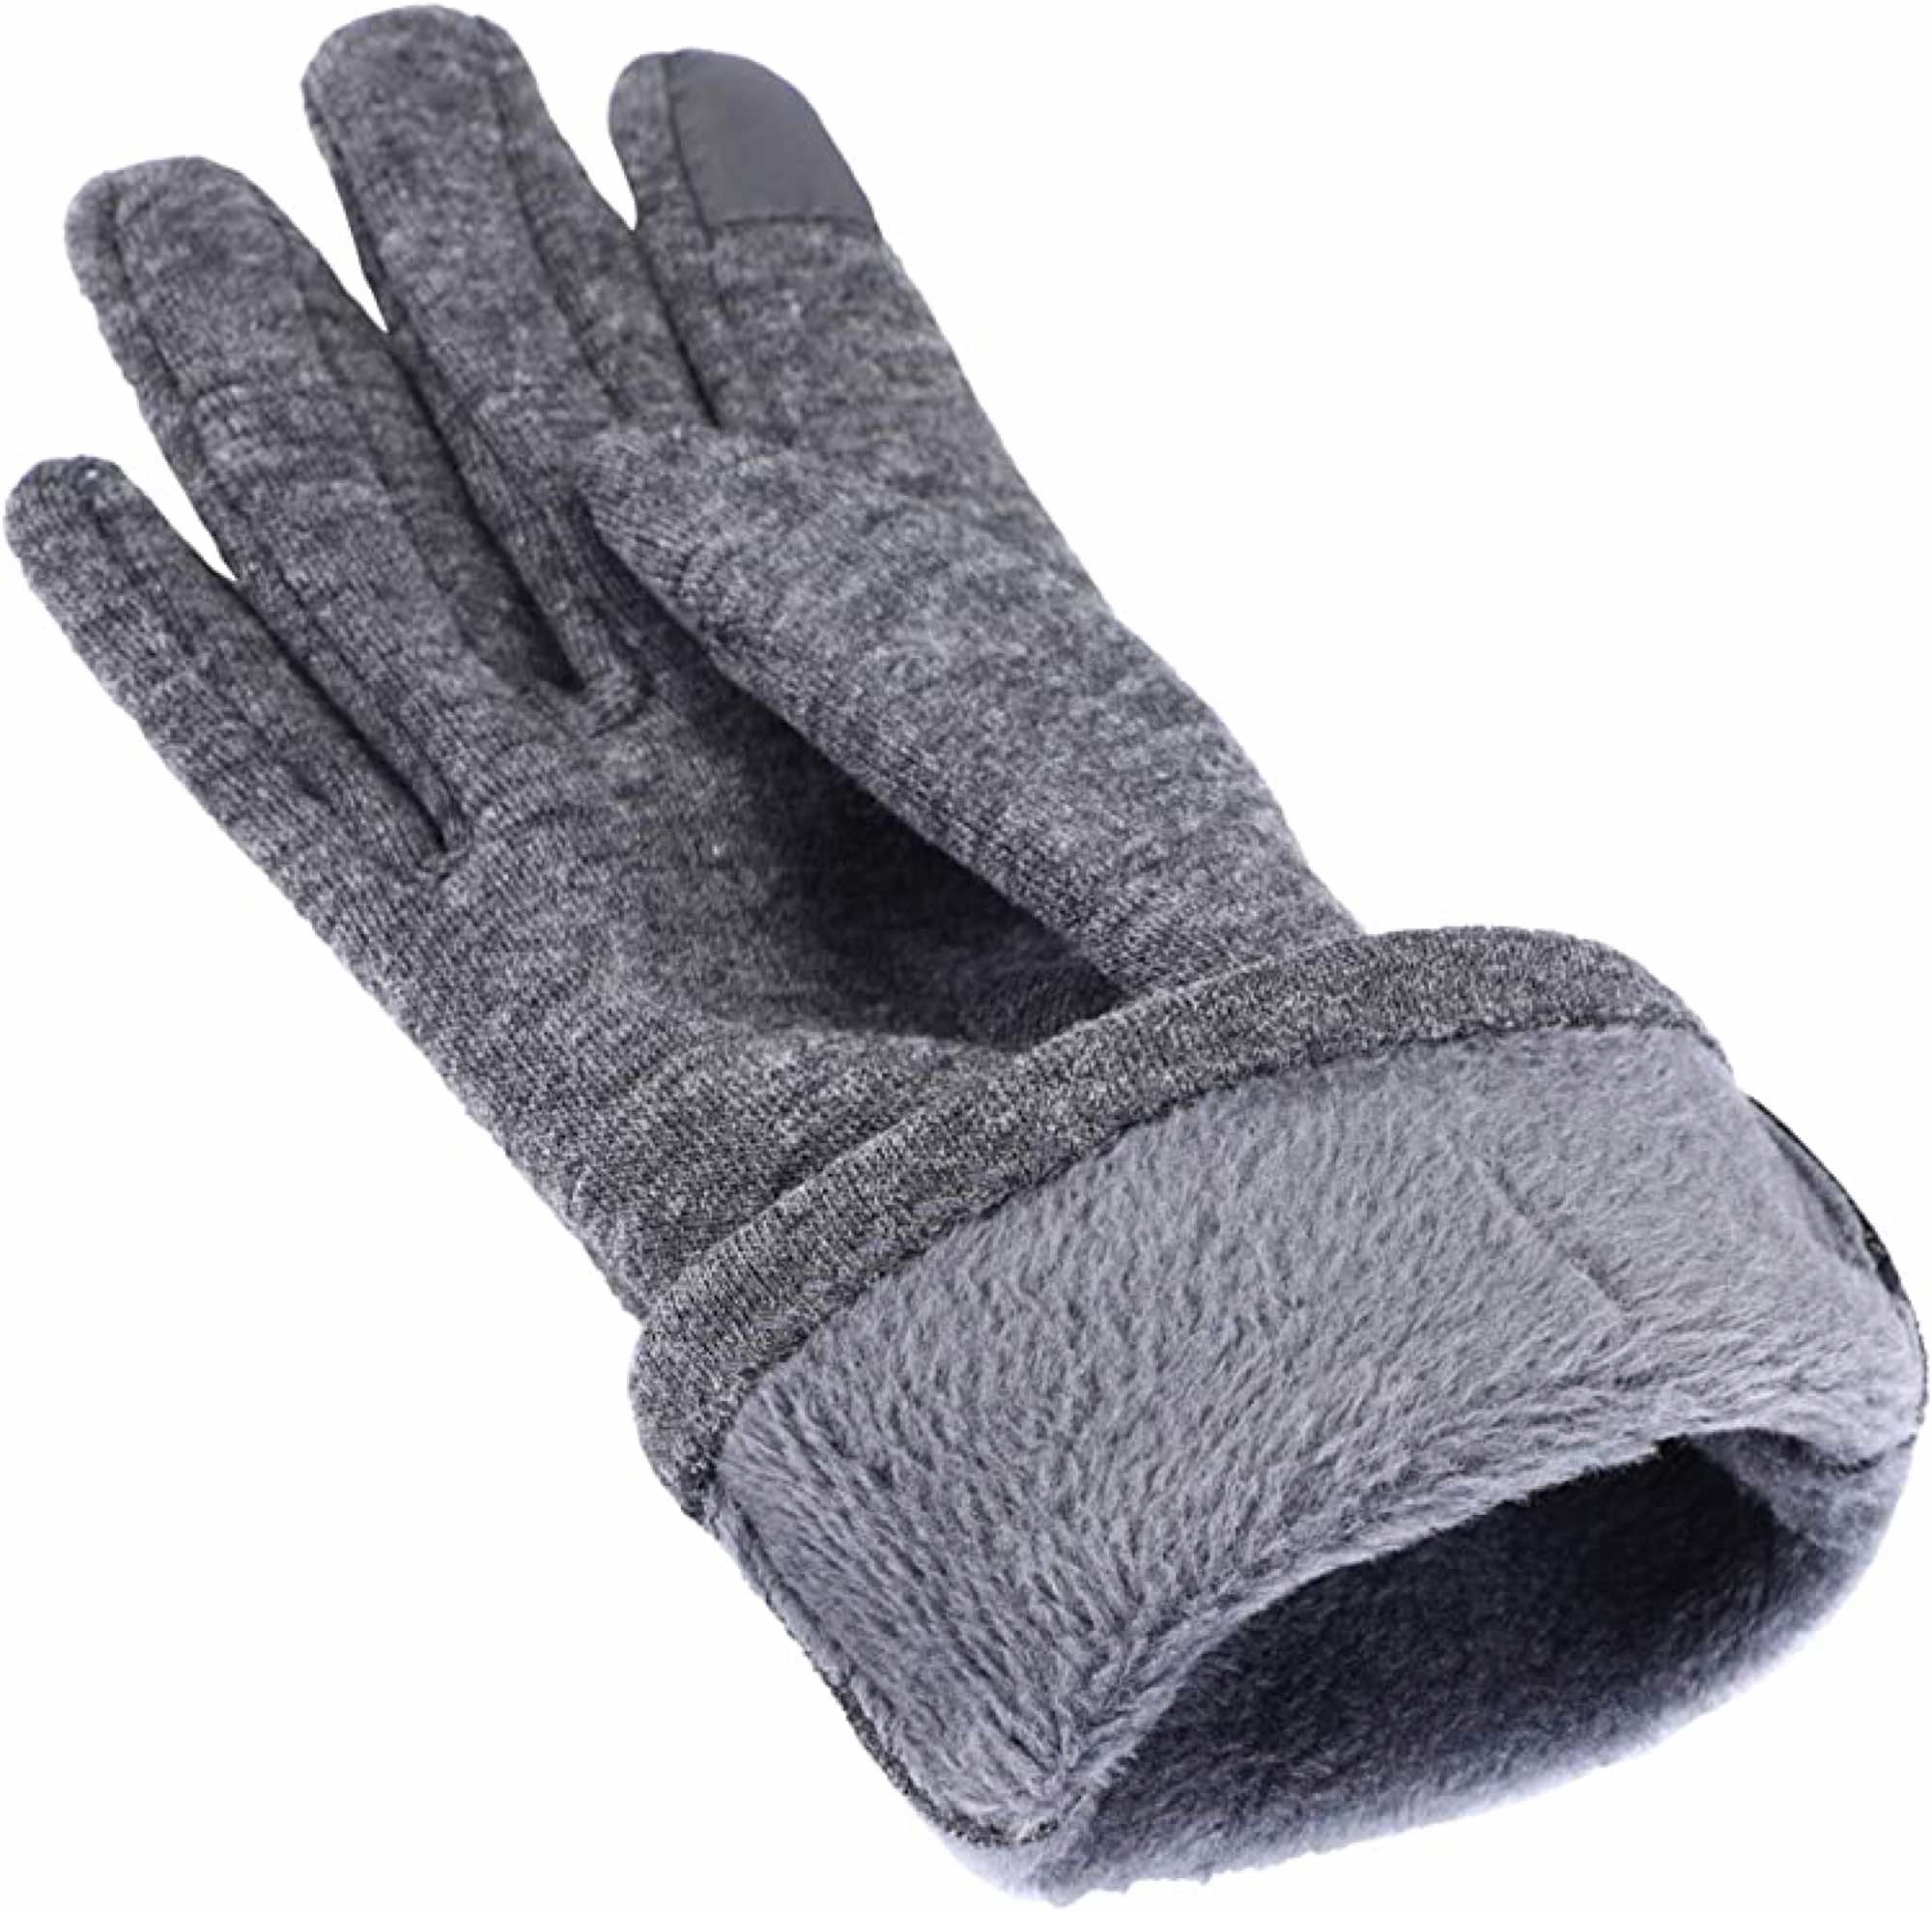 Winter Gloves Women, Touch Screen Gloves, Warm Fleece Lined Gloves, One Size  - Grey-8